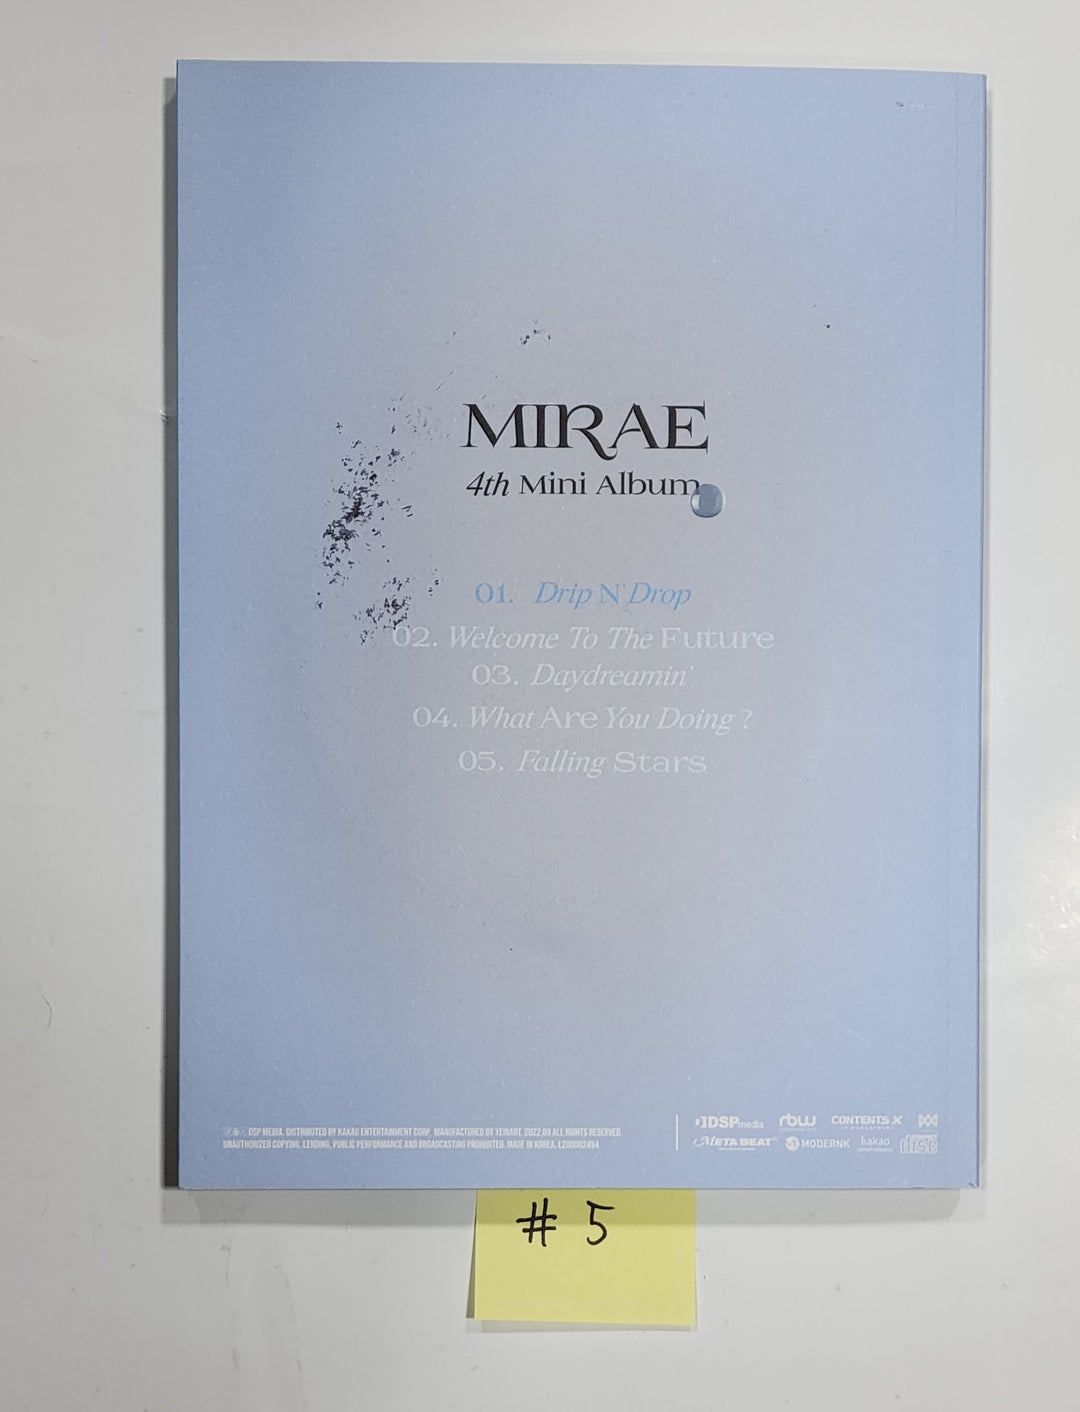 MIRAE "Ourturn " 4th Mini - Hand Autographed(Signed) Promo Album